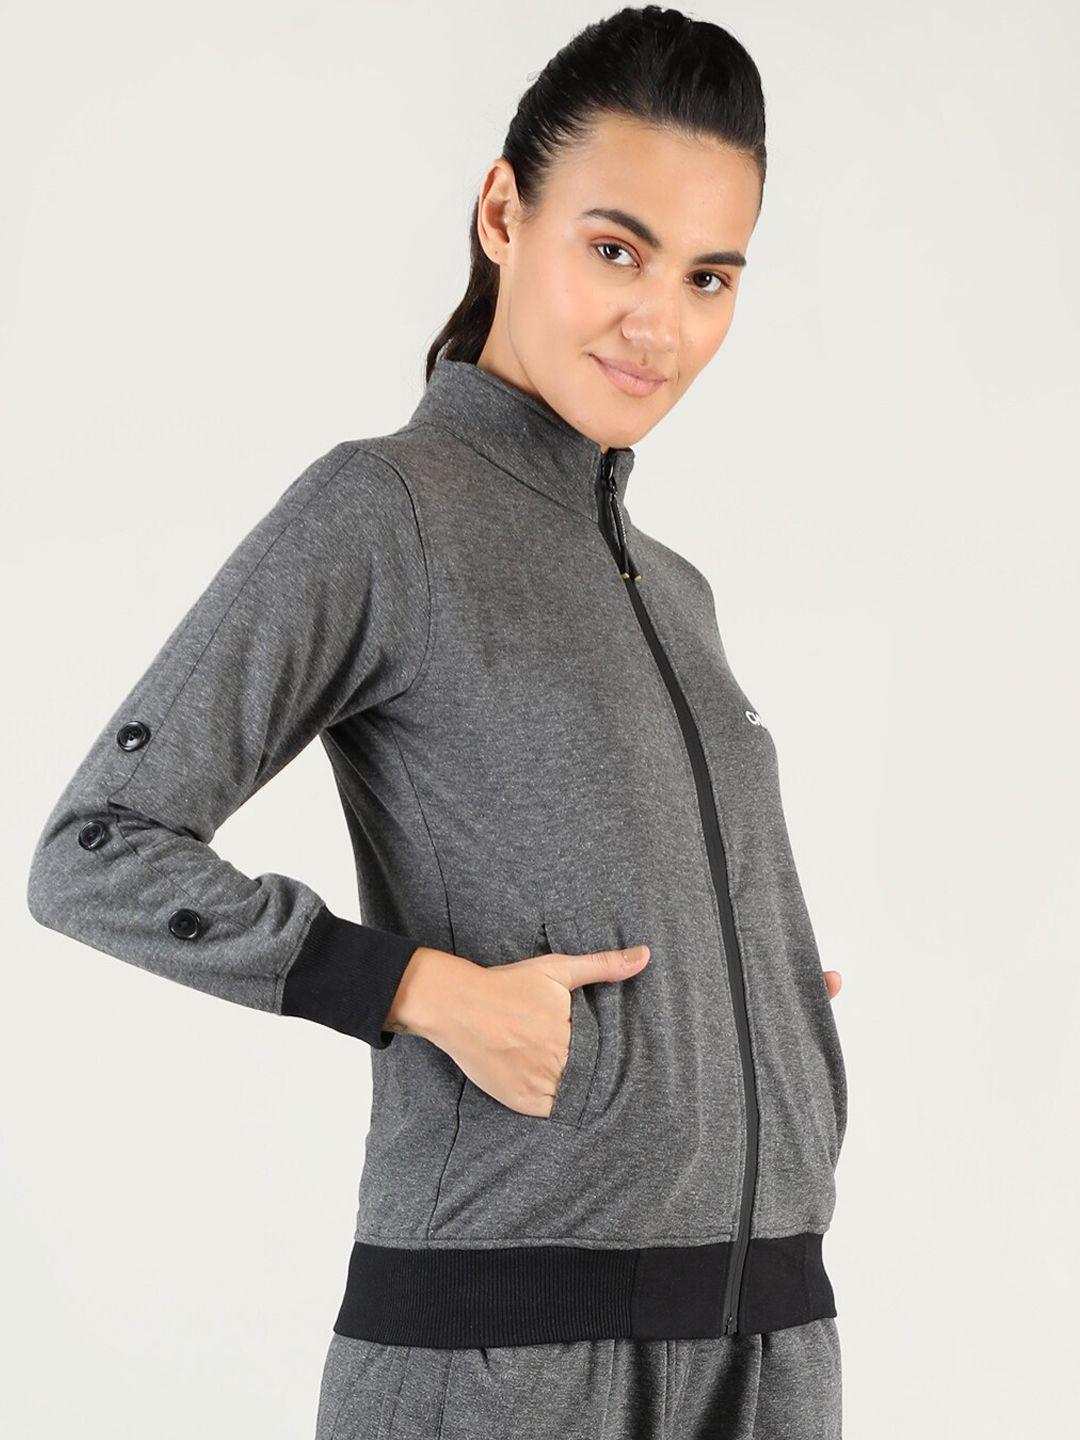 chkokko-women-grey-training-or-gym-sporty-jacket